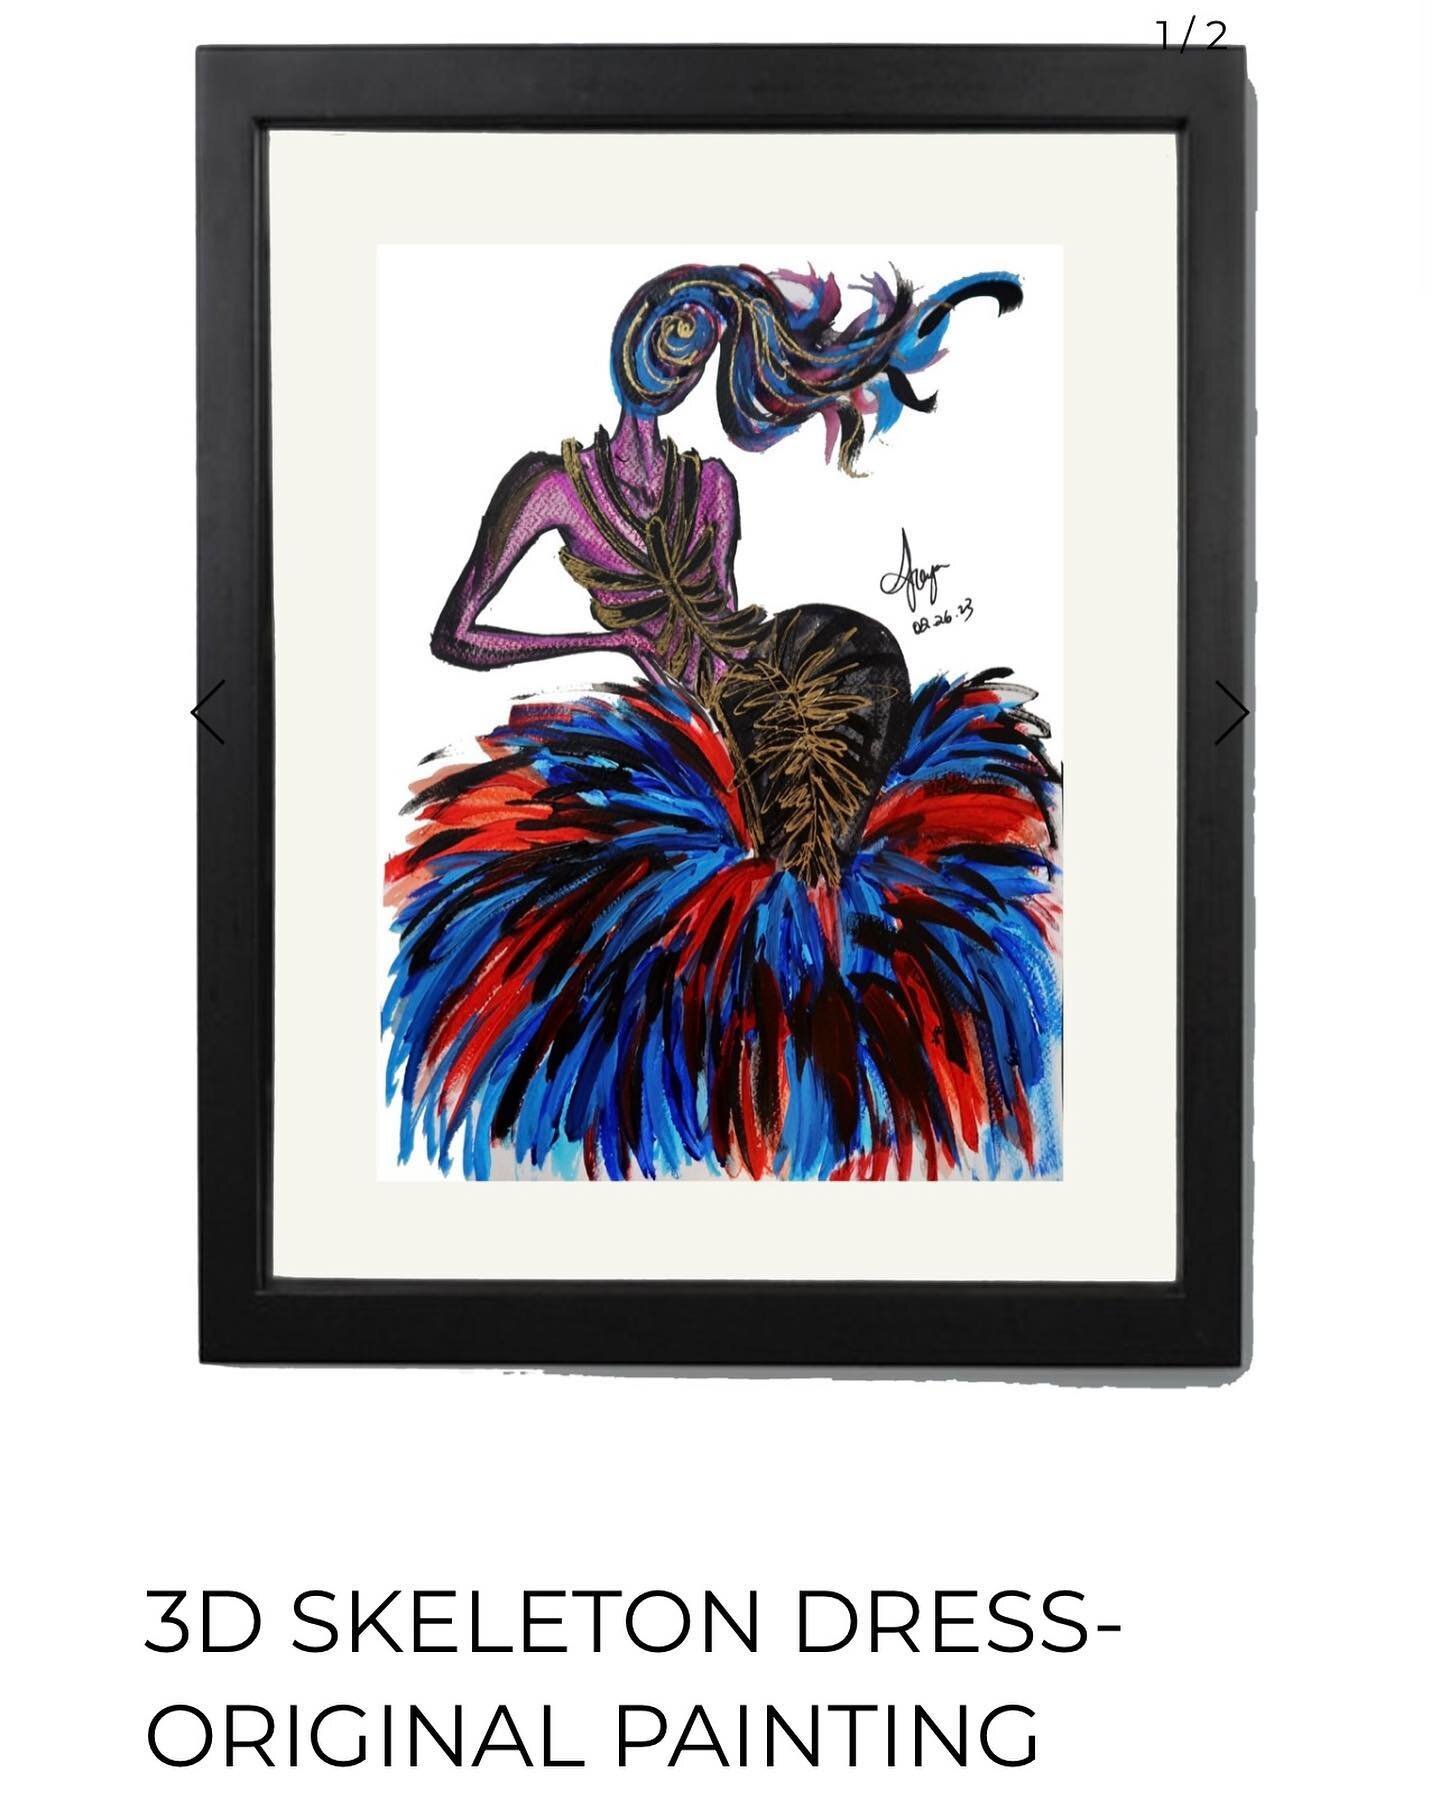 JOYA MA Painting for Body Sacred Collection, available on joyamaofficial.com
@joya.ma .
.

#designer #designerbrand #joya #joyama #joyamaofficial #joyayourway  #clothing #outfits #chic #city #citygirl #style #nyfw #fashion #fashionweek #fashiondesign